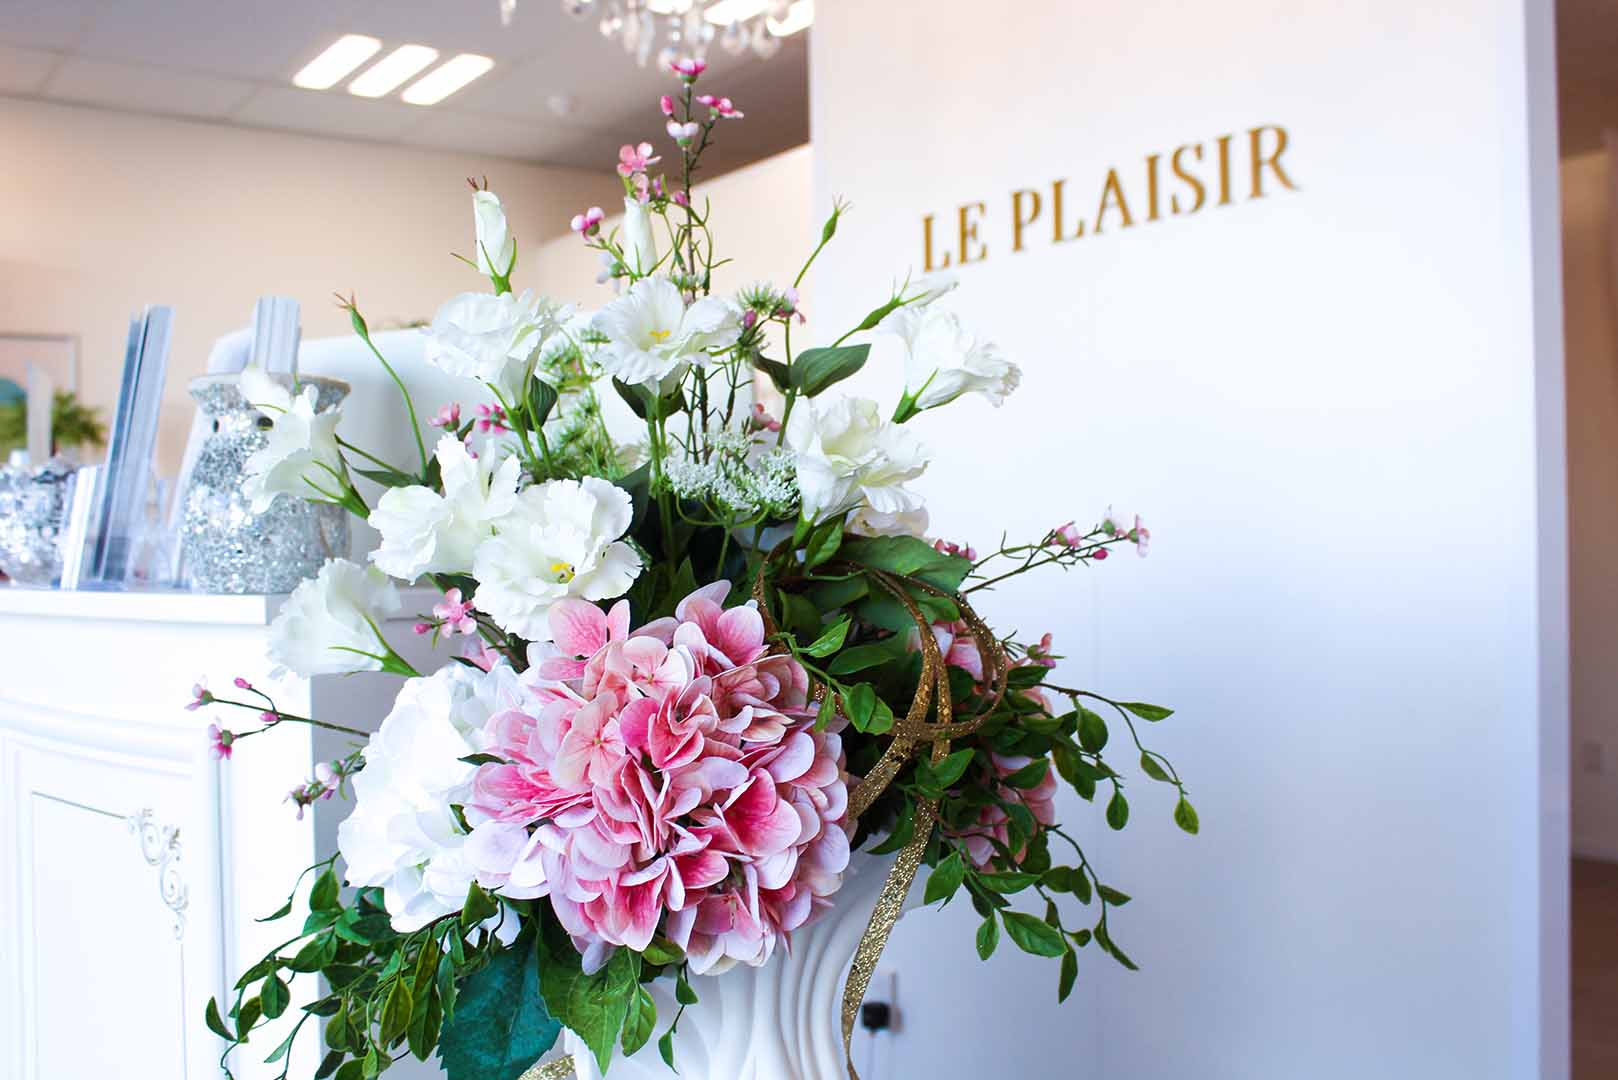 Flower display at Le Plaisir